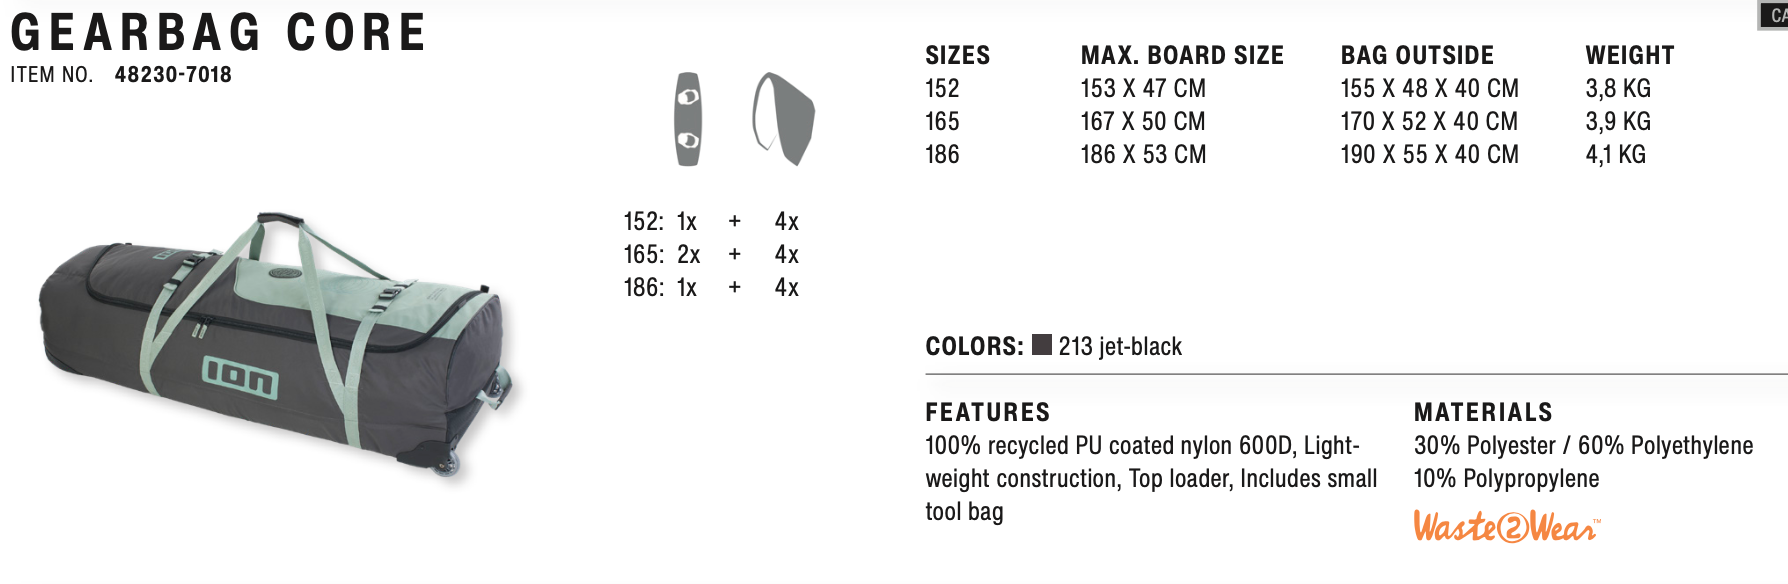 ION gear bag tehnical specification